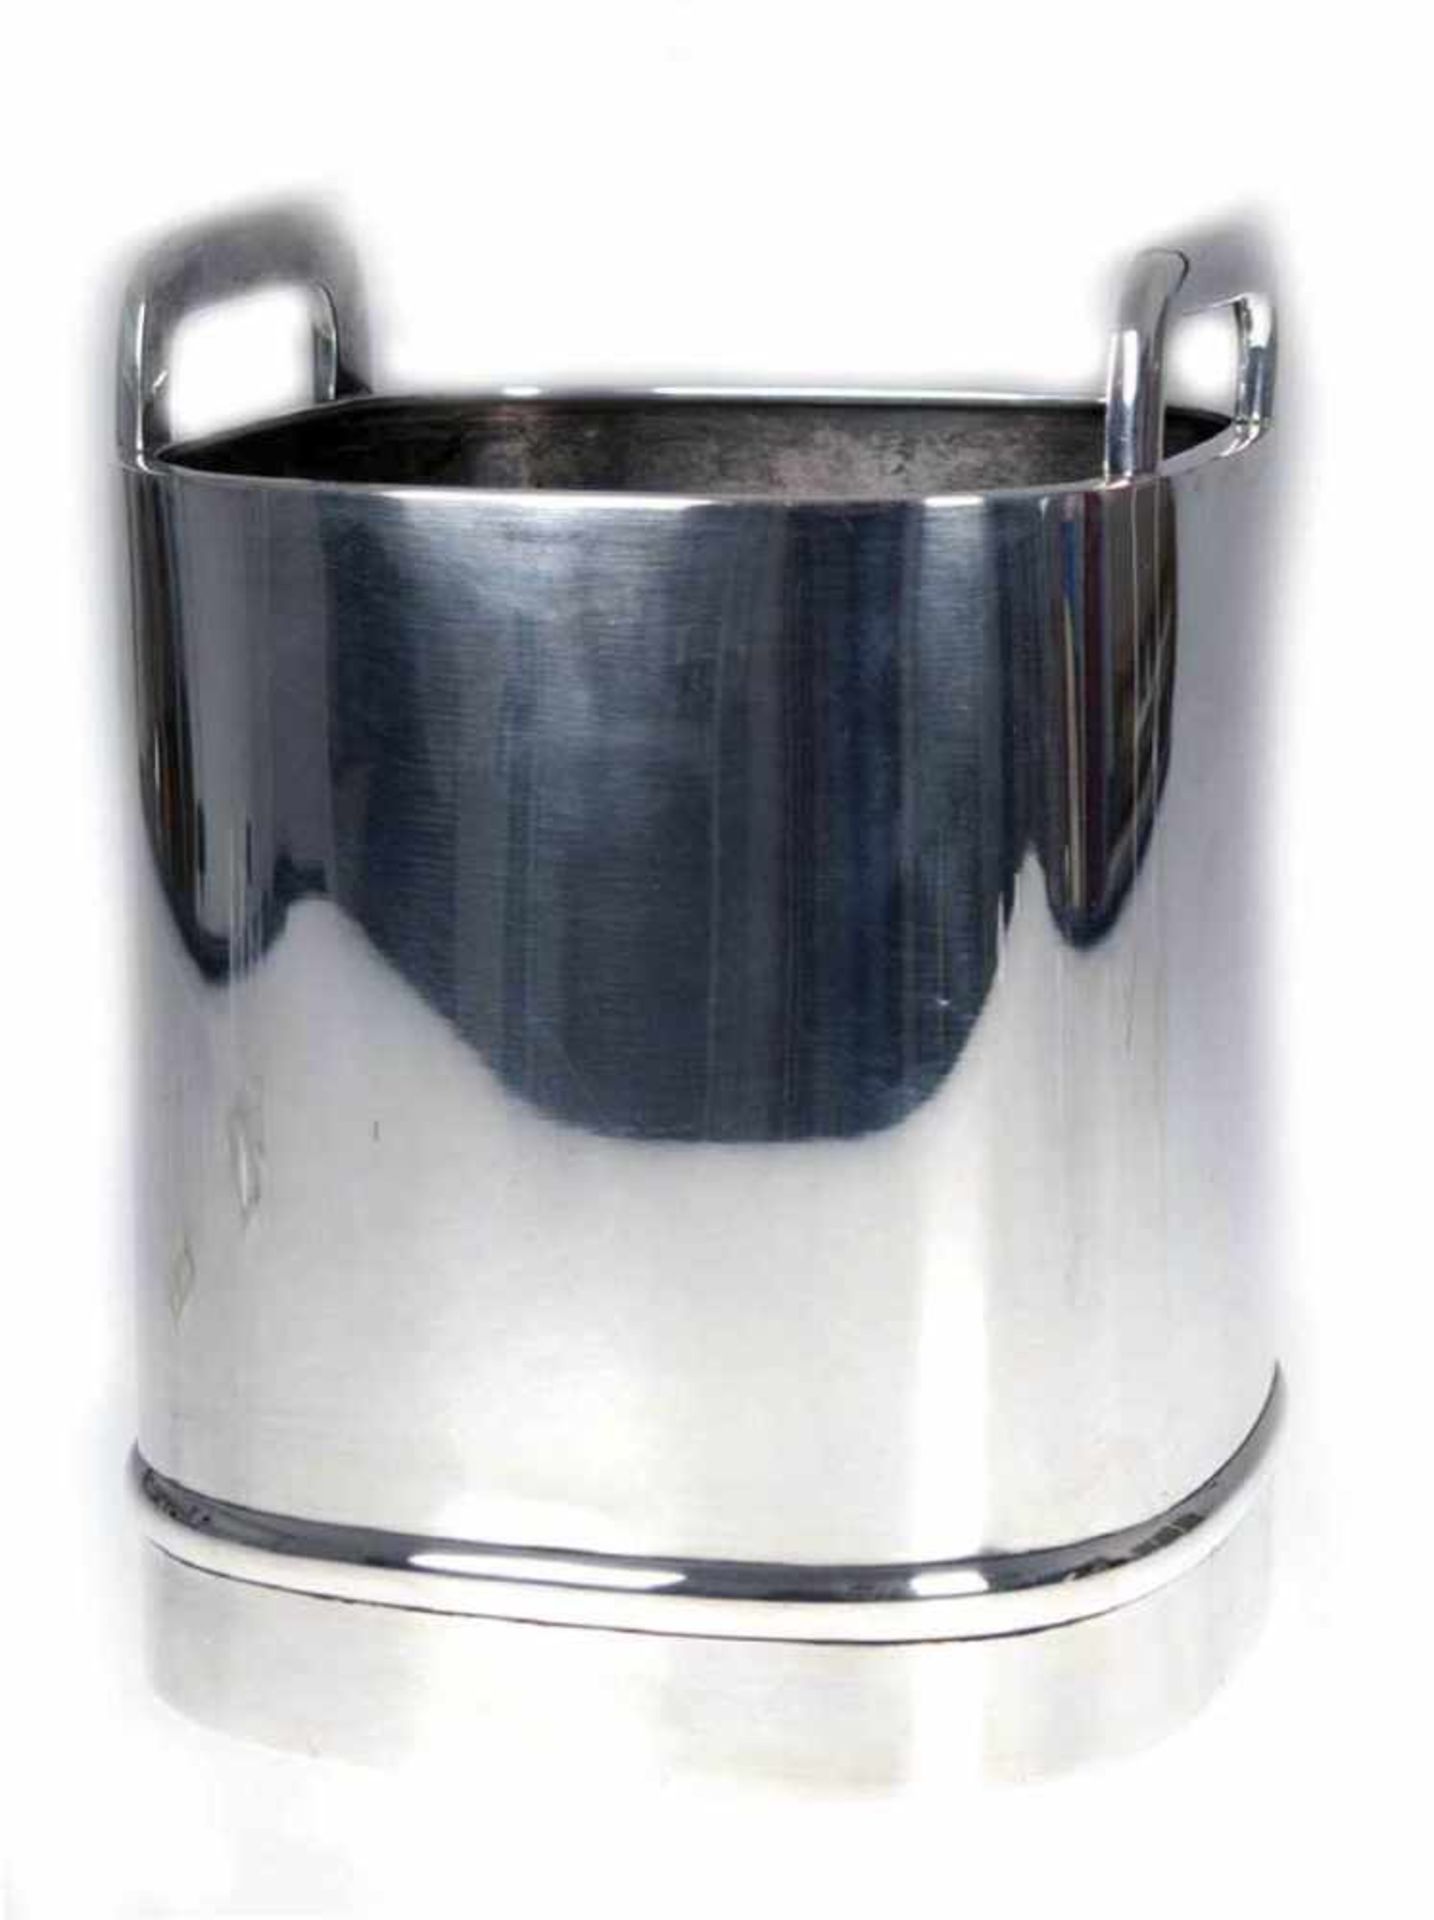 Sekt- /Weinkühler, 800er Silber, punziert, ca. 1388 g, im Querschnitt quadratische Formmit